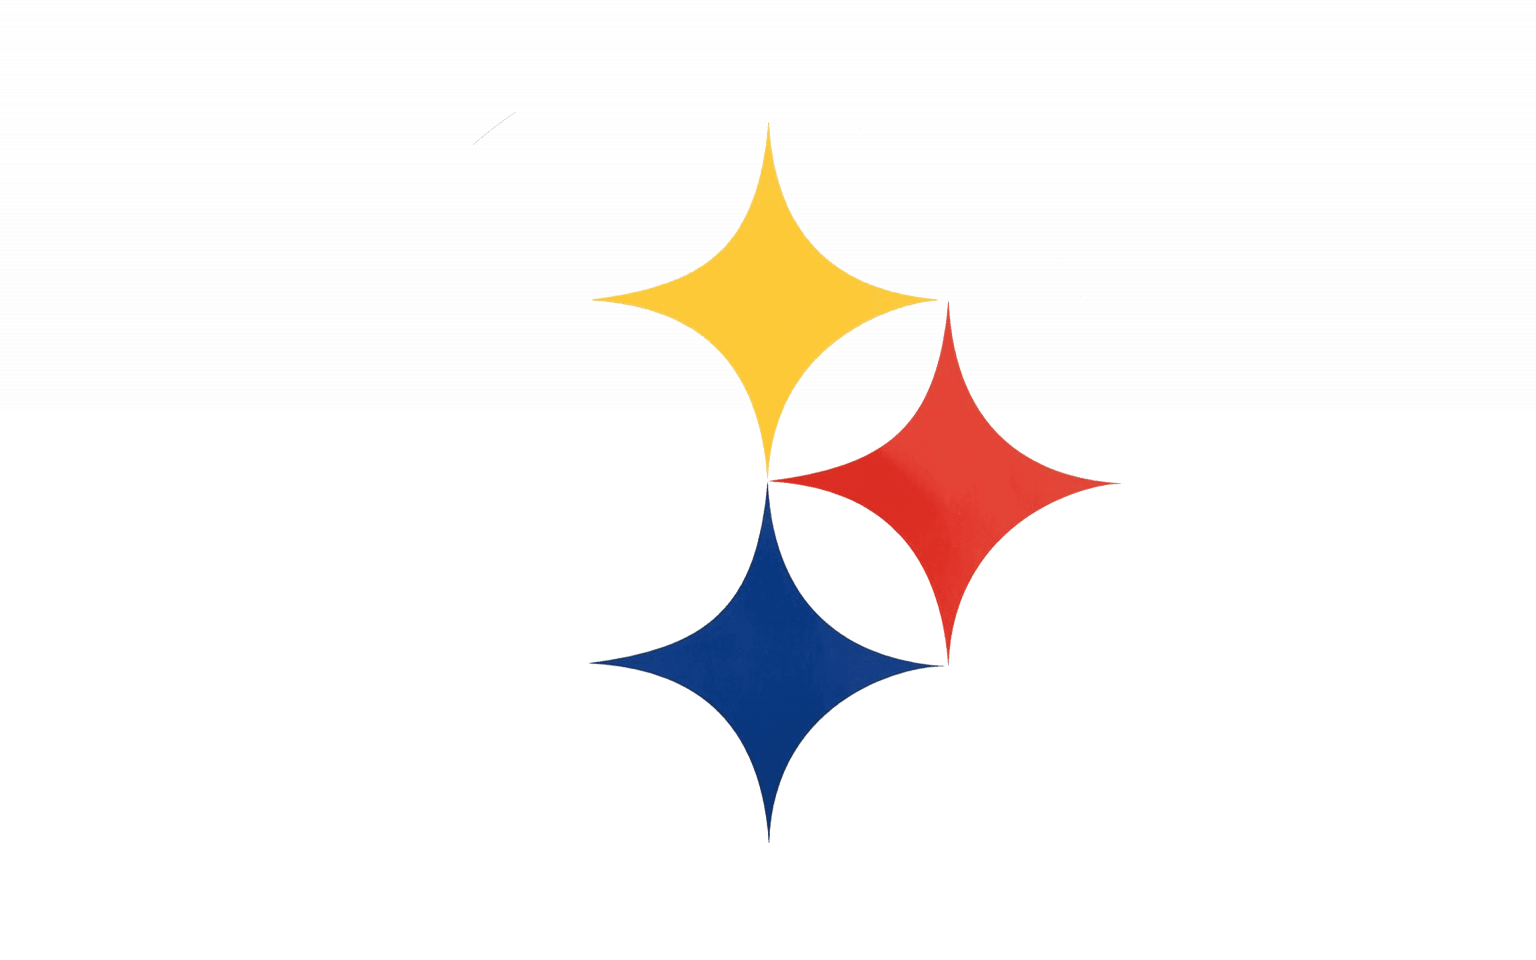 Steelers Logo -LogoLook – logo PNG, SVG free download